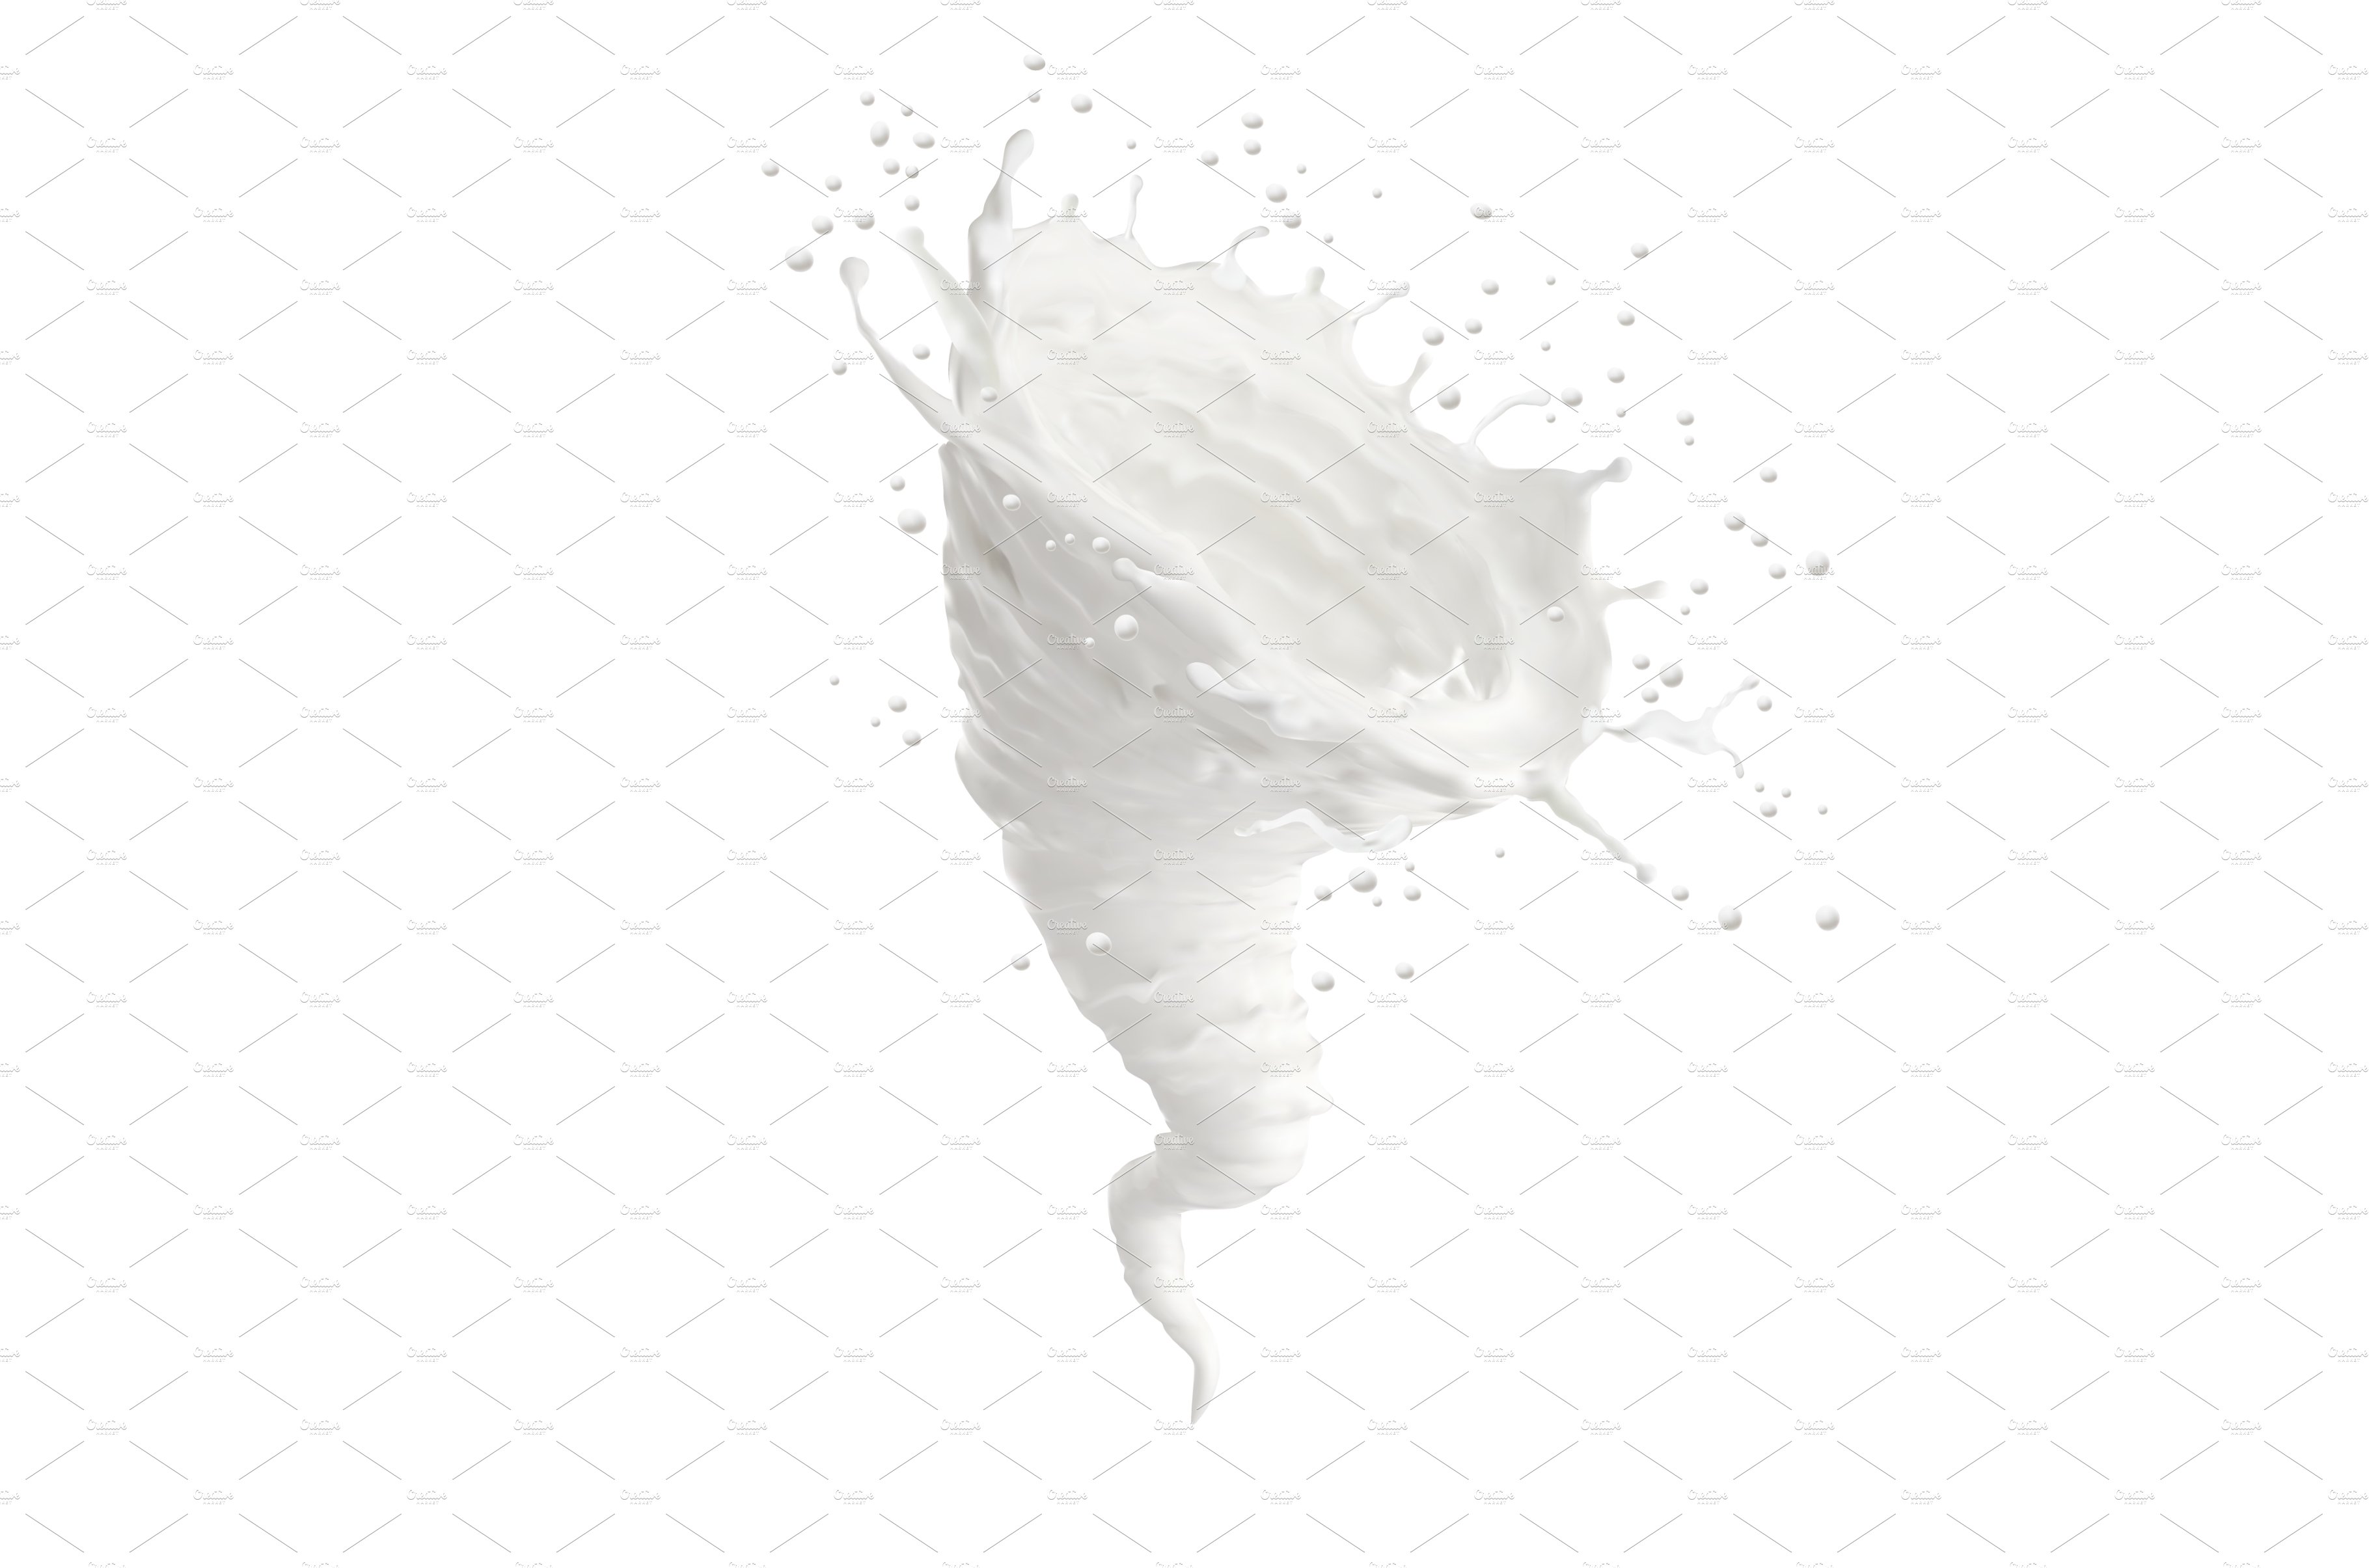 Tornado, twister milk splash cover image.